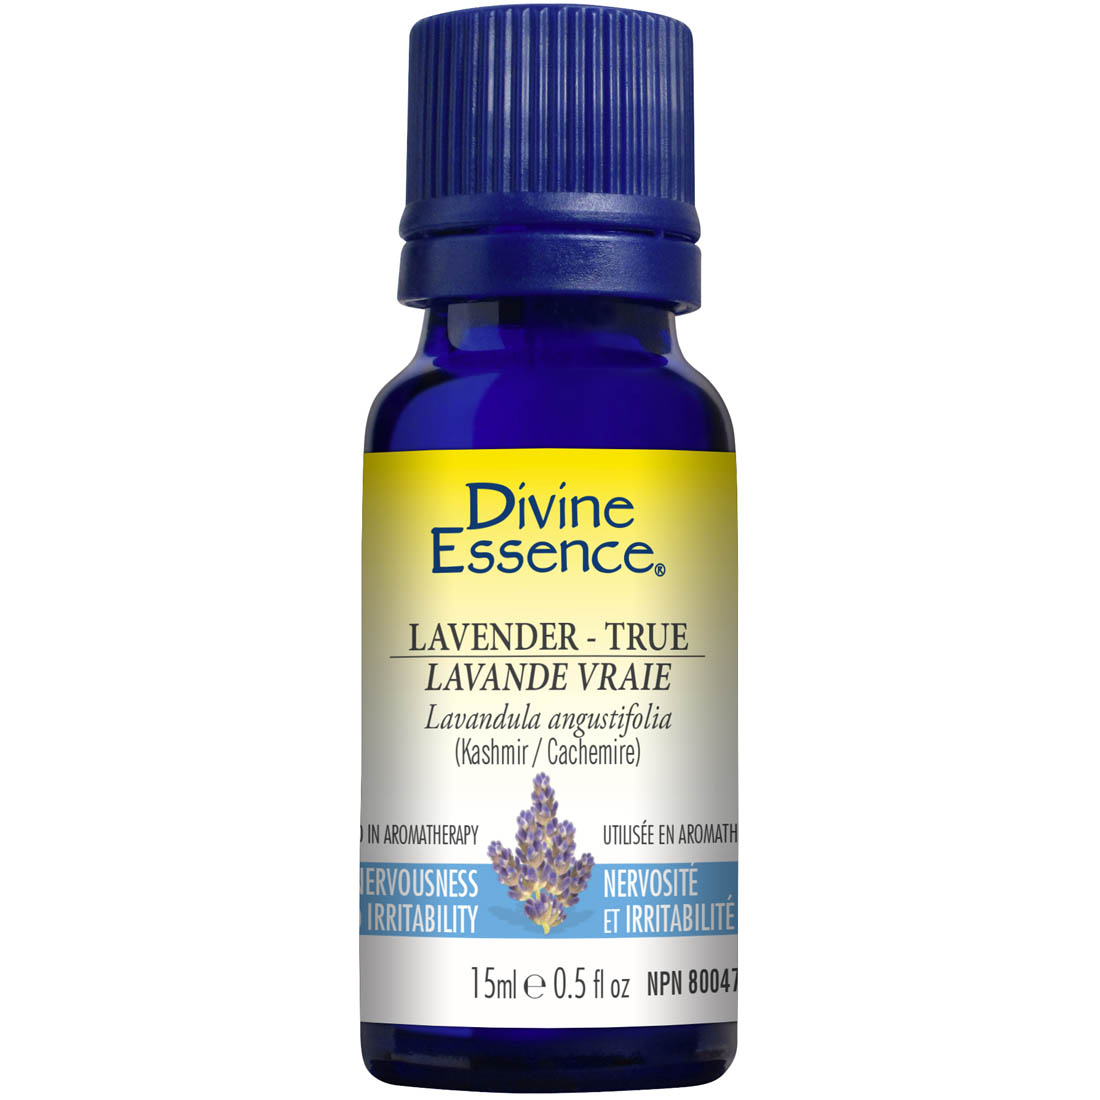 Divine Essence Lavender - True - Kashmir Essential Oil, 15ml